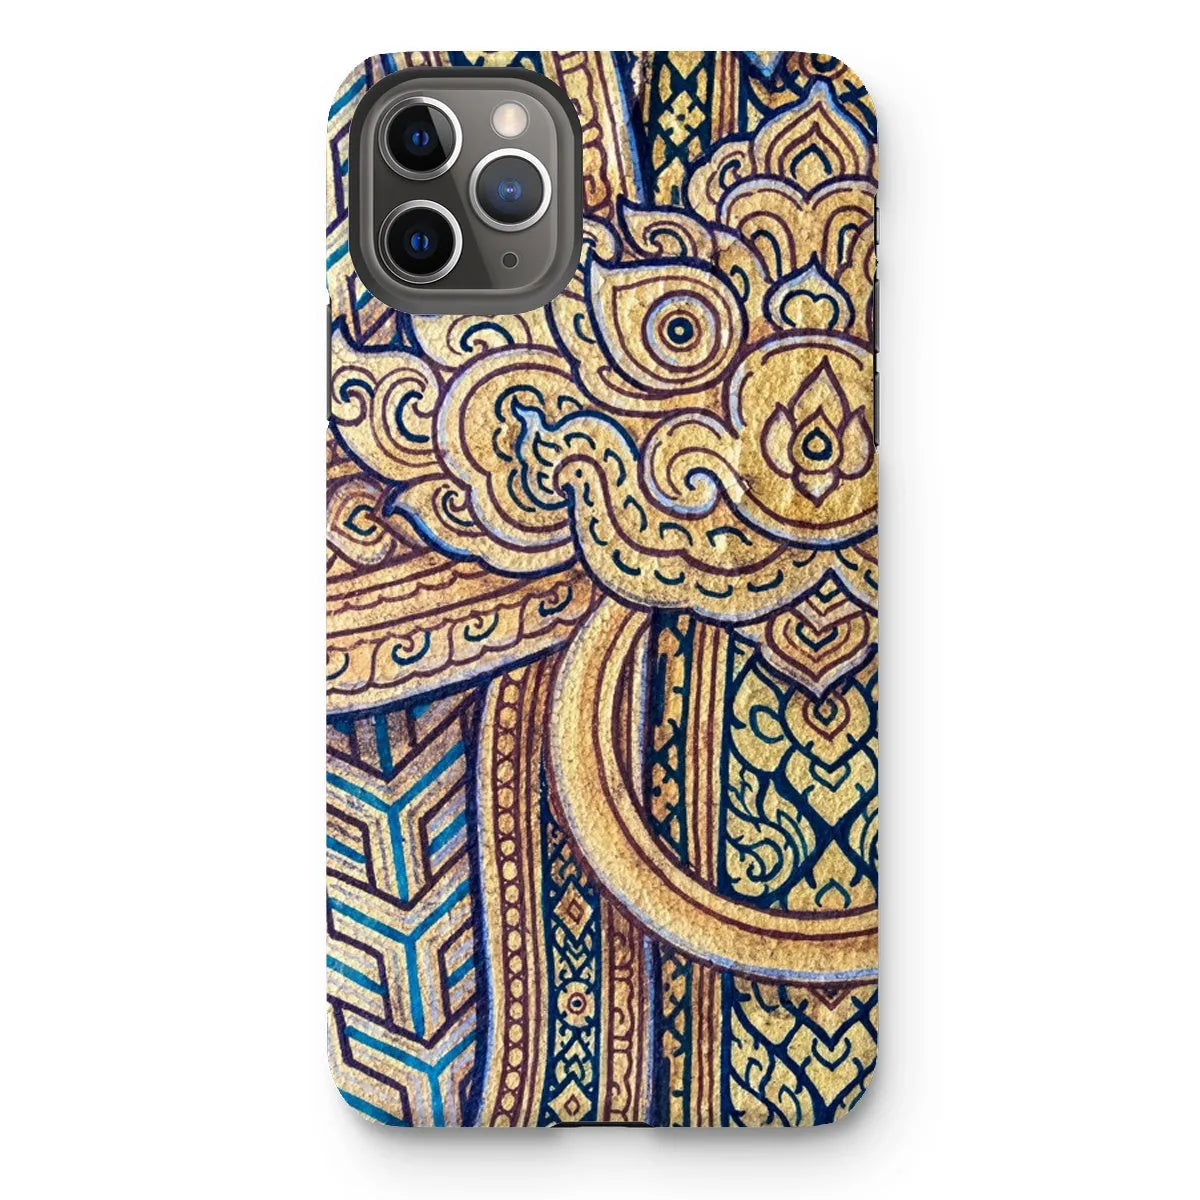 Man’s Best Friend - Thai Aesthetic Art Phone Case - Iphone 11 Pro Max / Matte - Mobile Phone Cases - Aesthetic Art